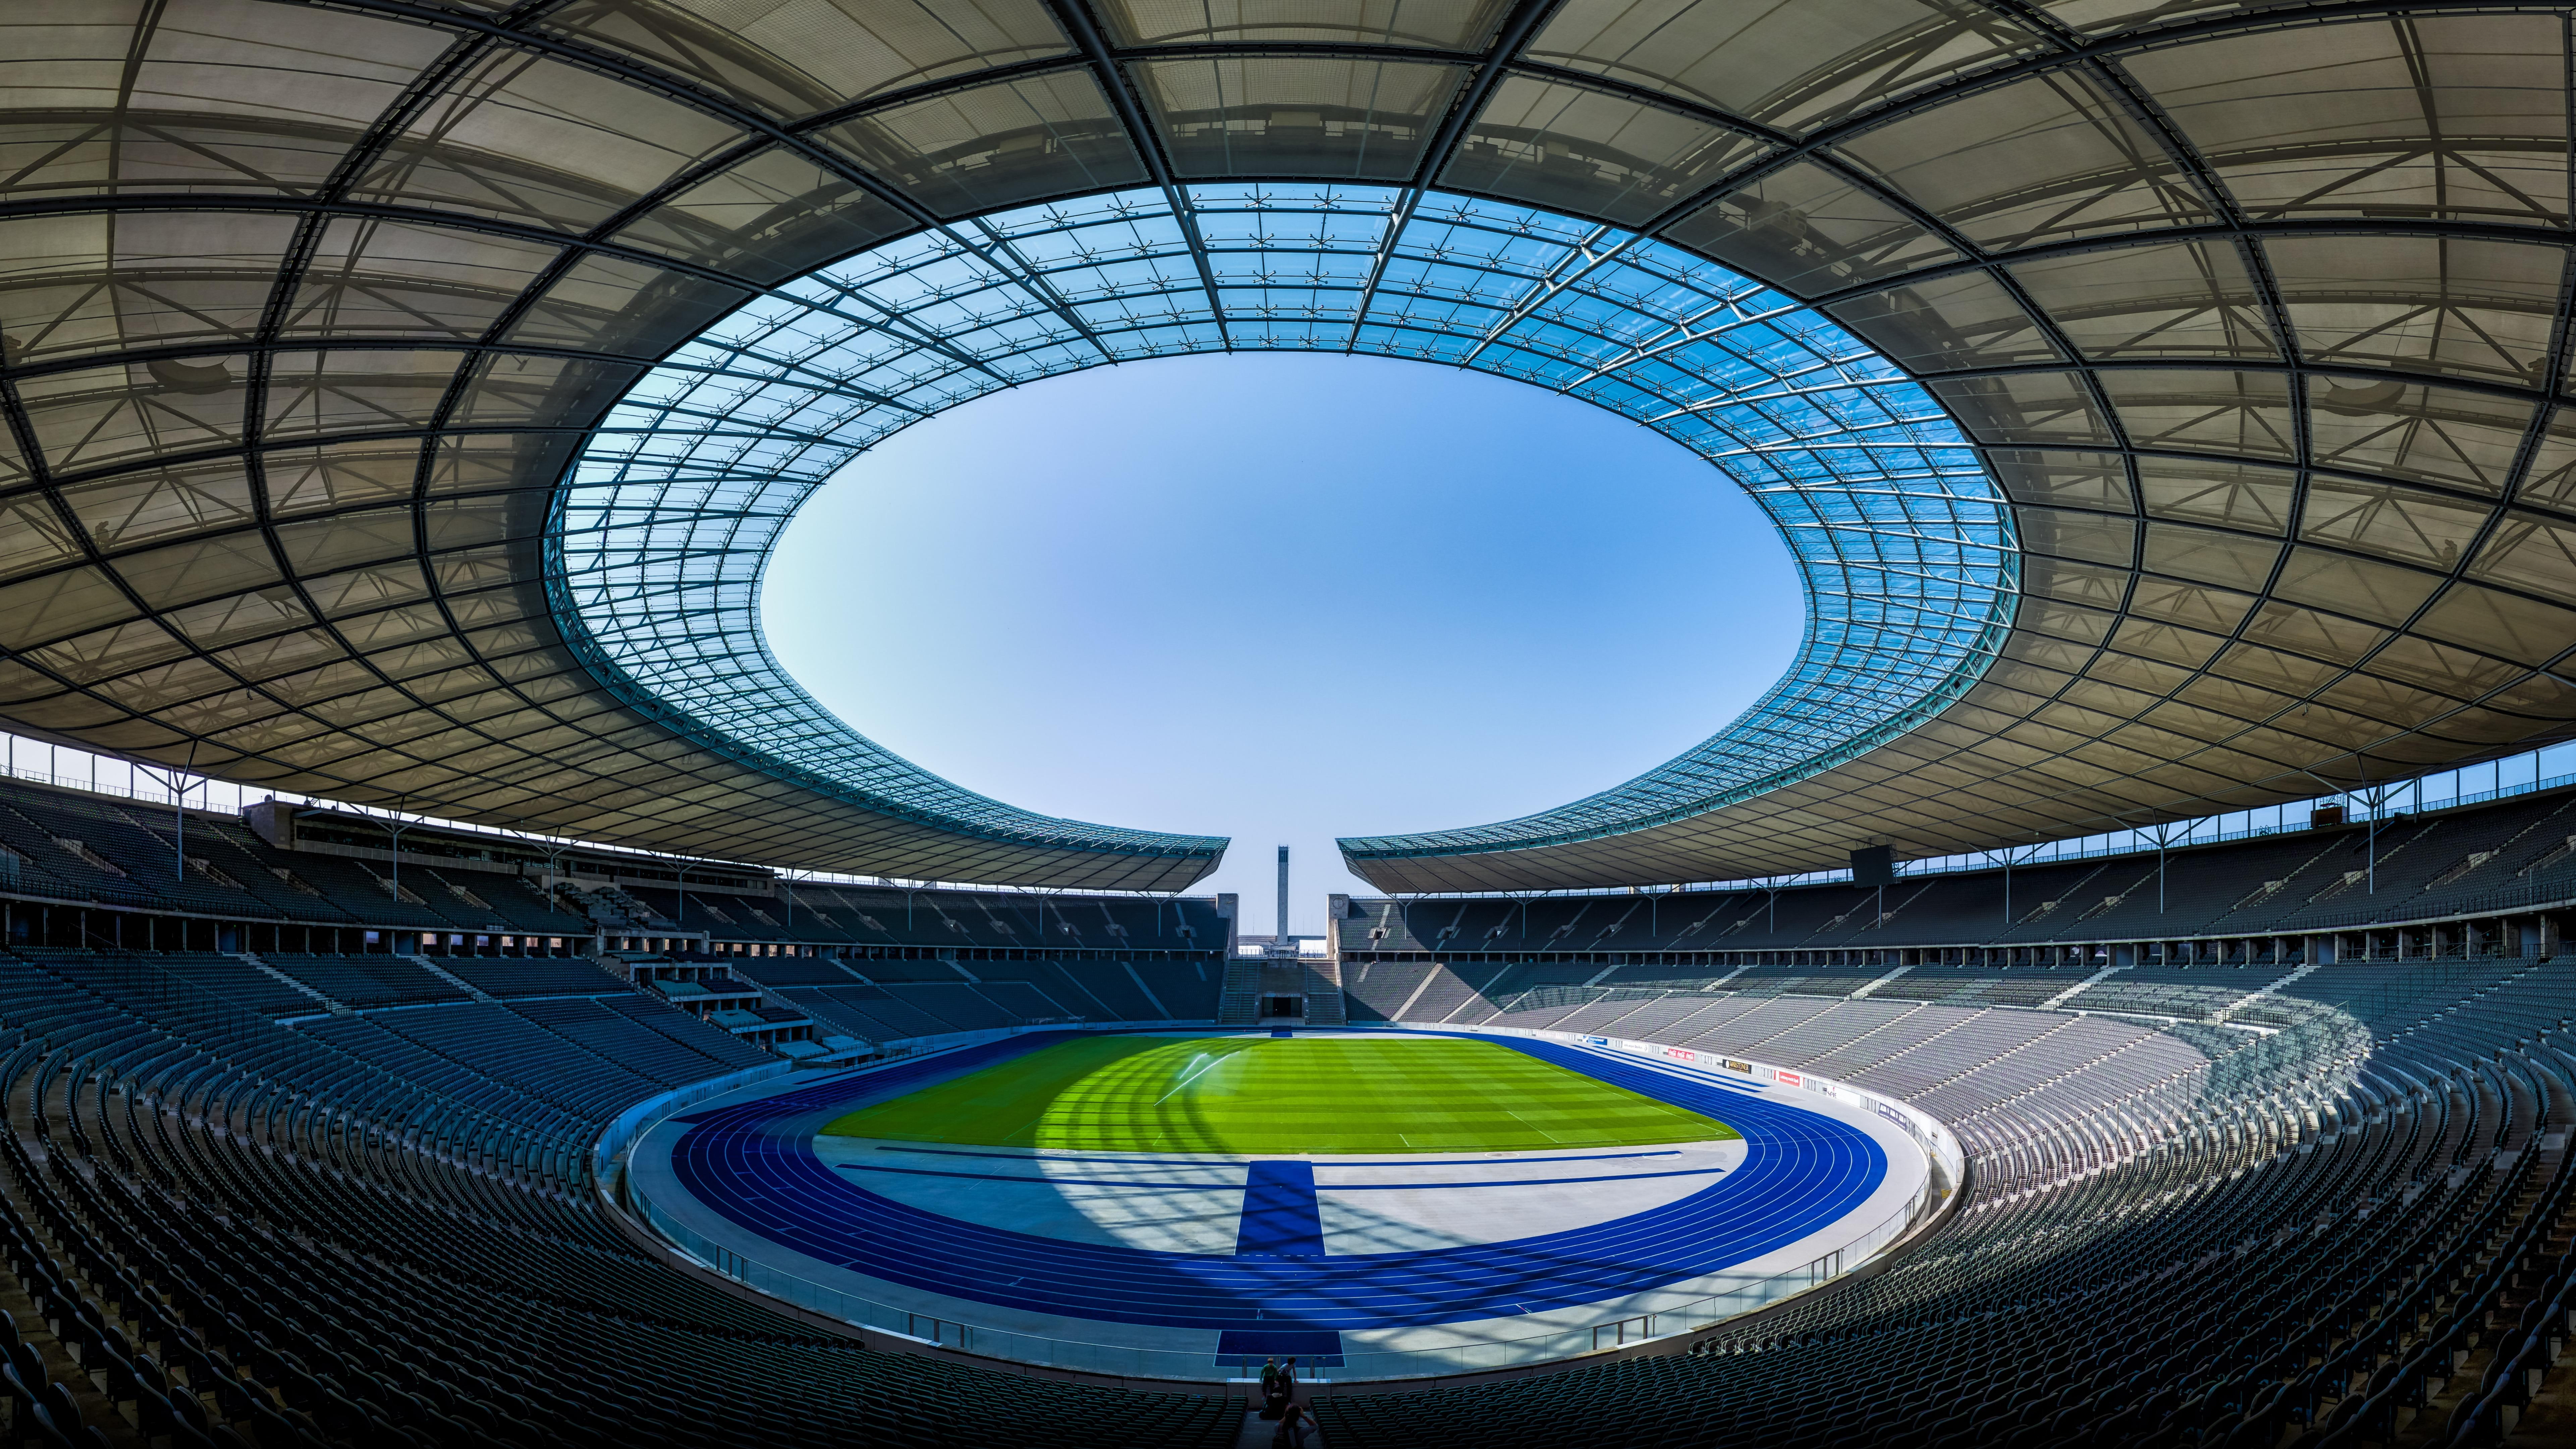 deutsches, olympiastadion, berlin, germany, sport venue, structure